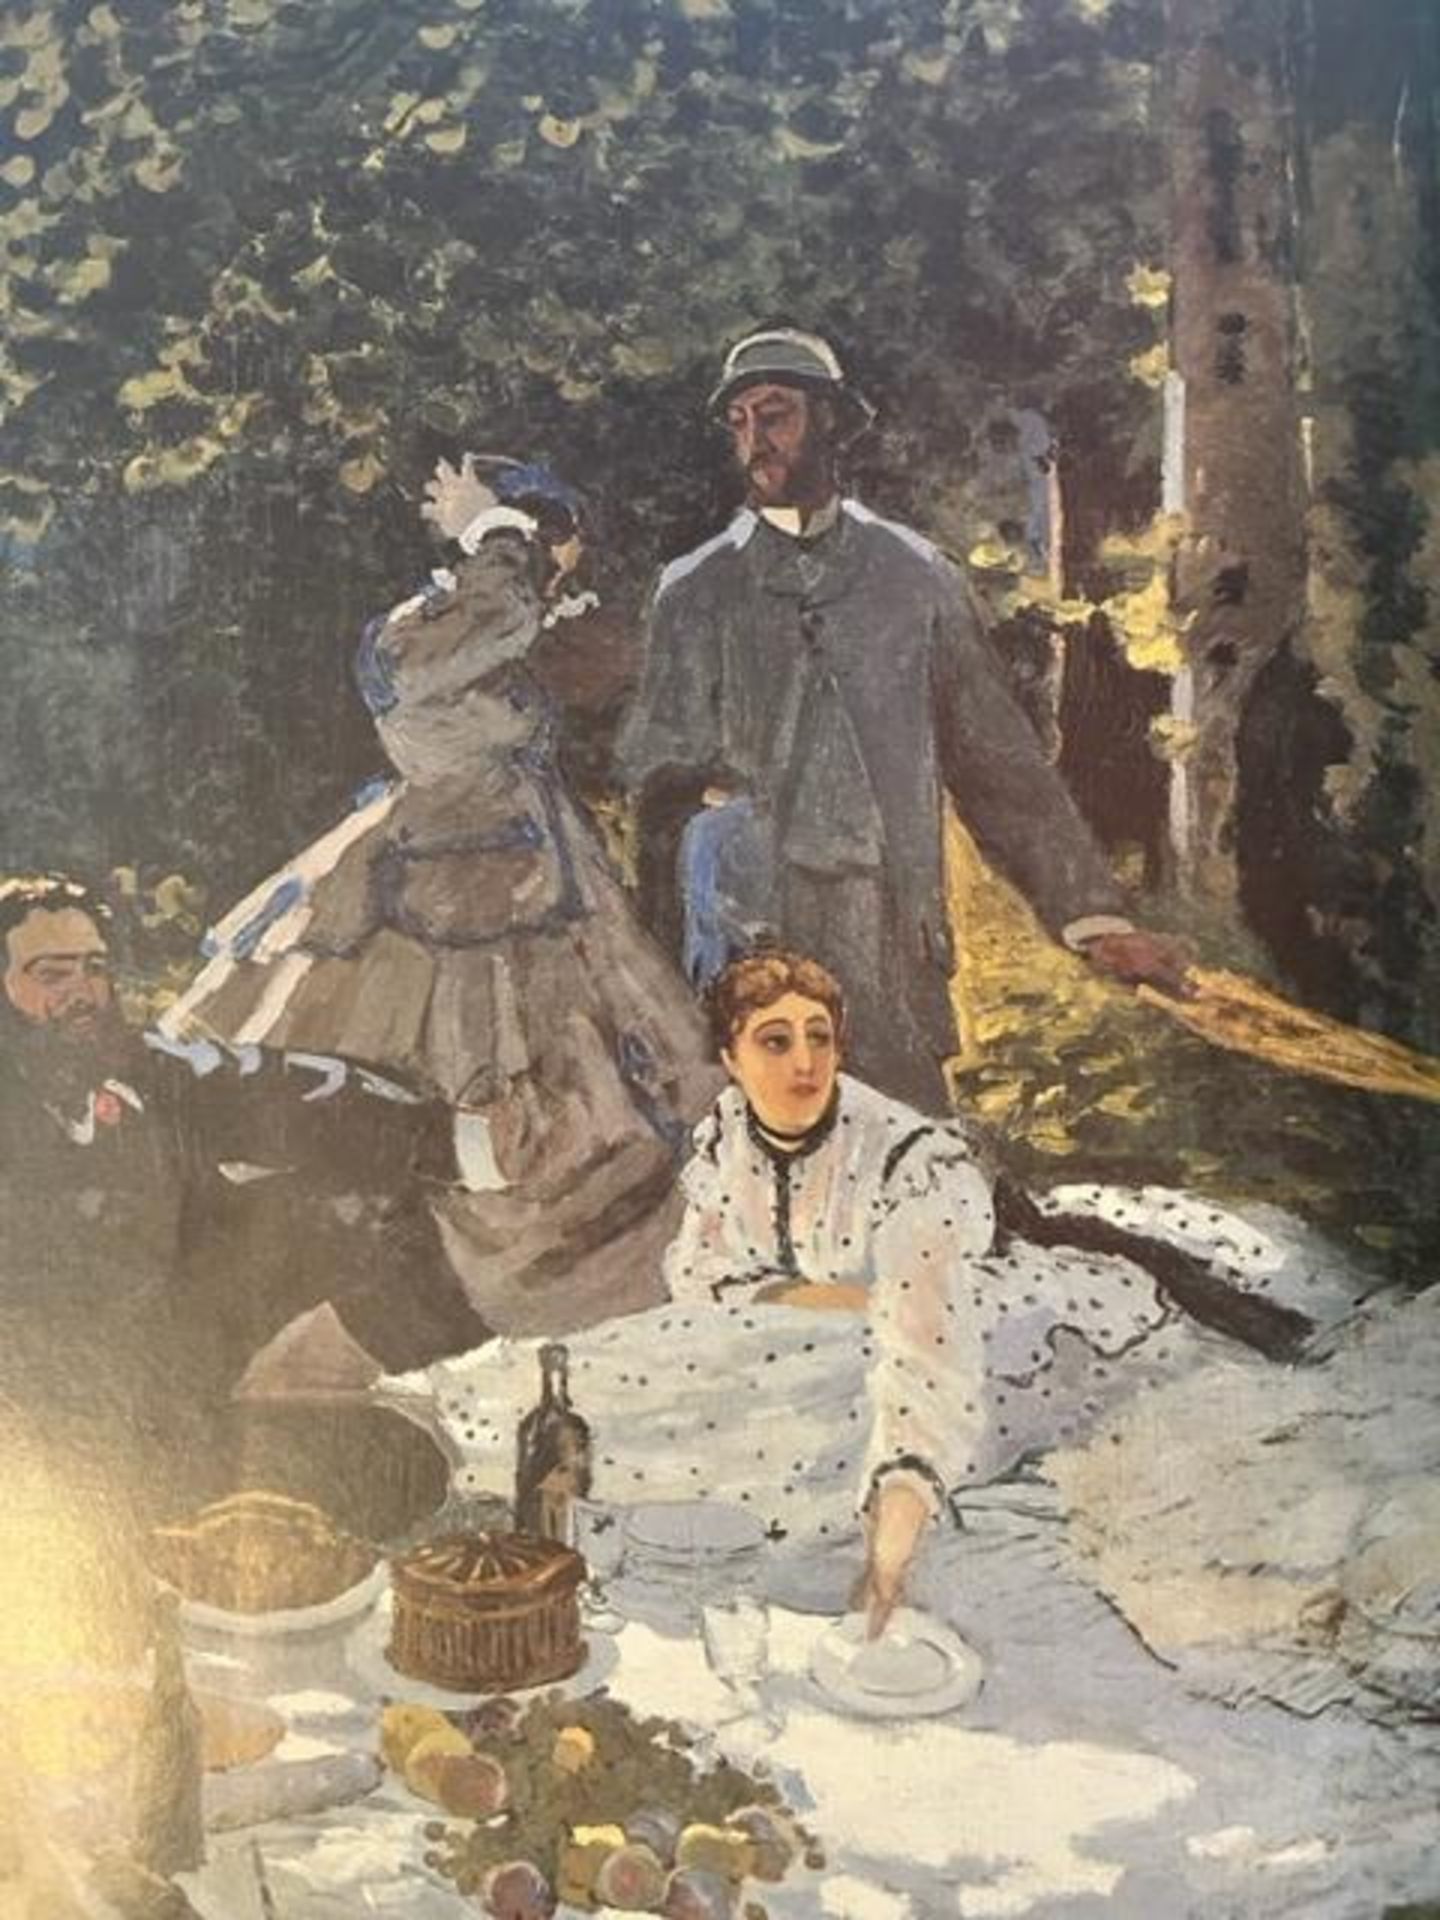 Claude Monet "Luncheon on the Grass" Print.